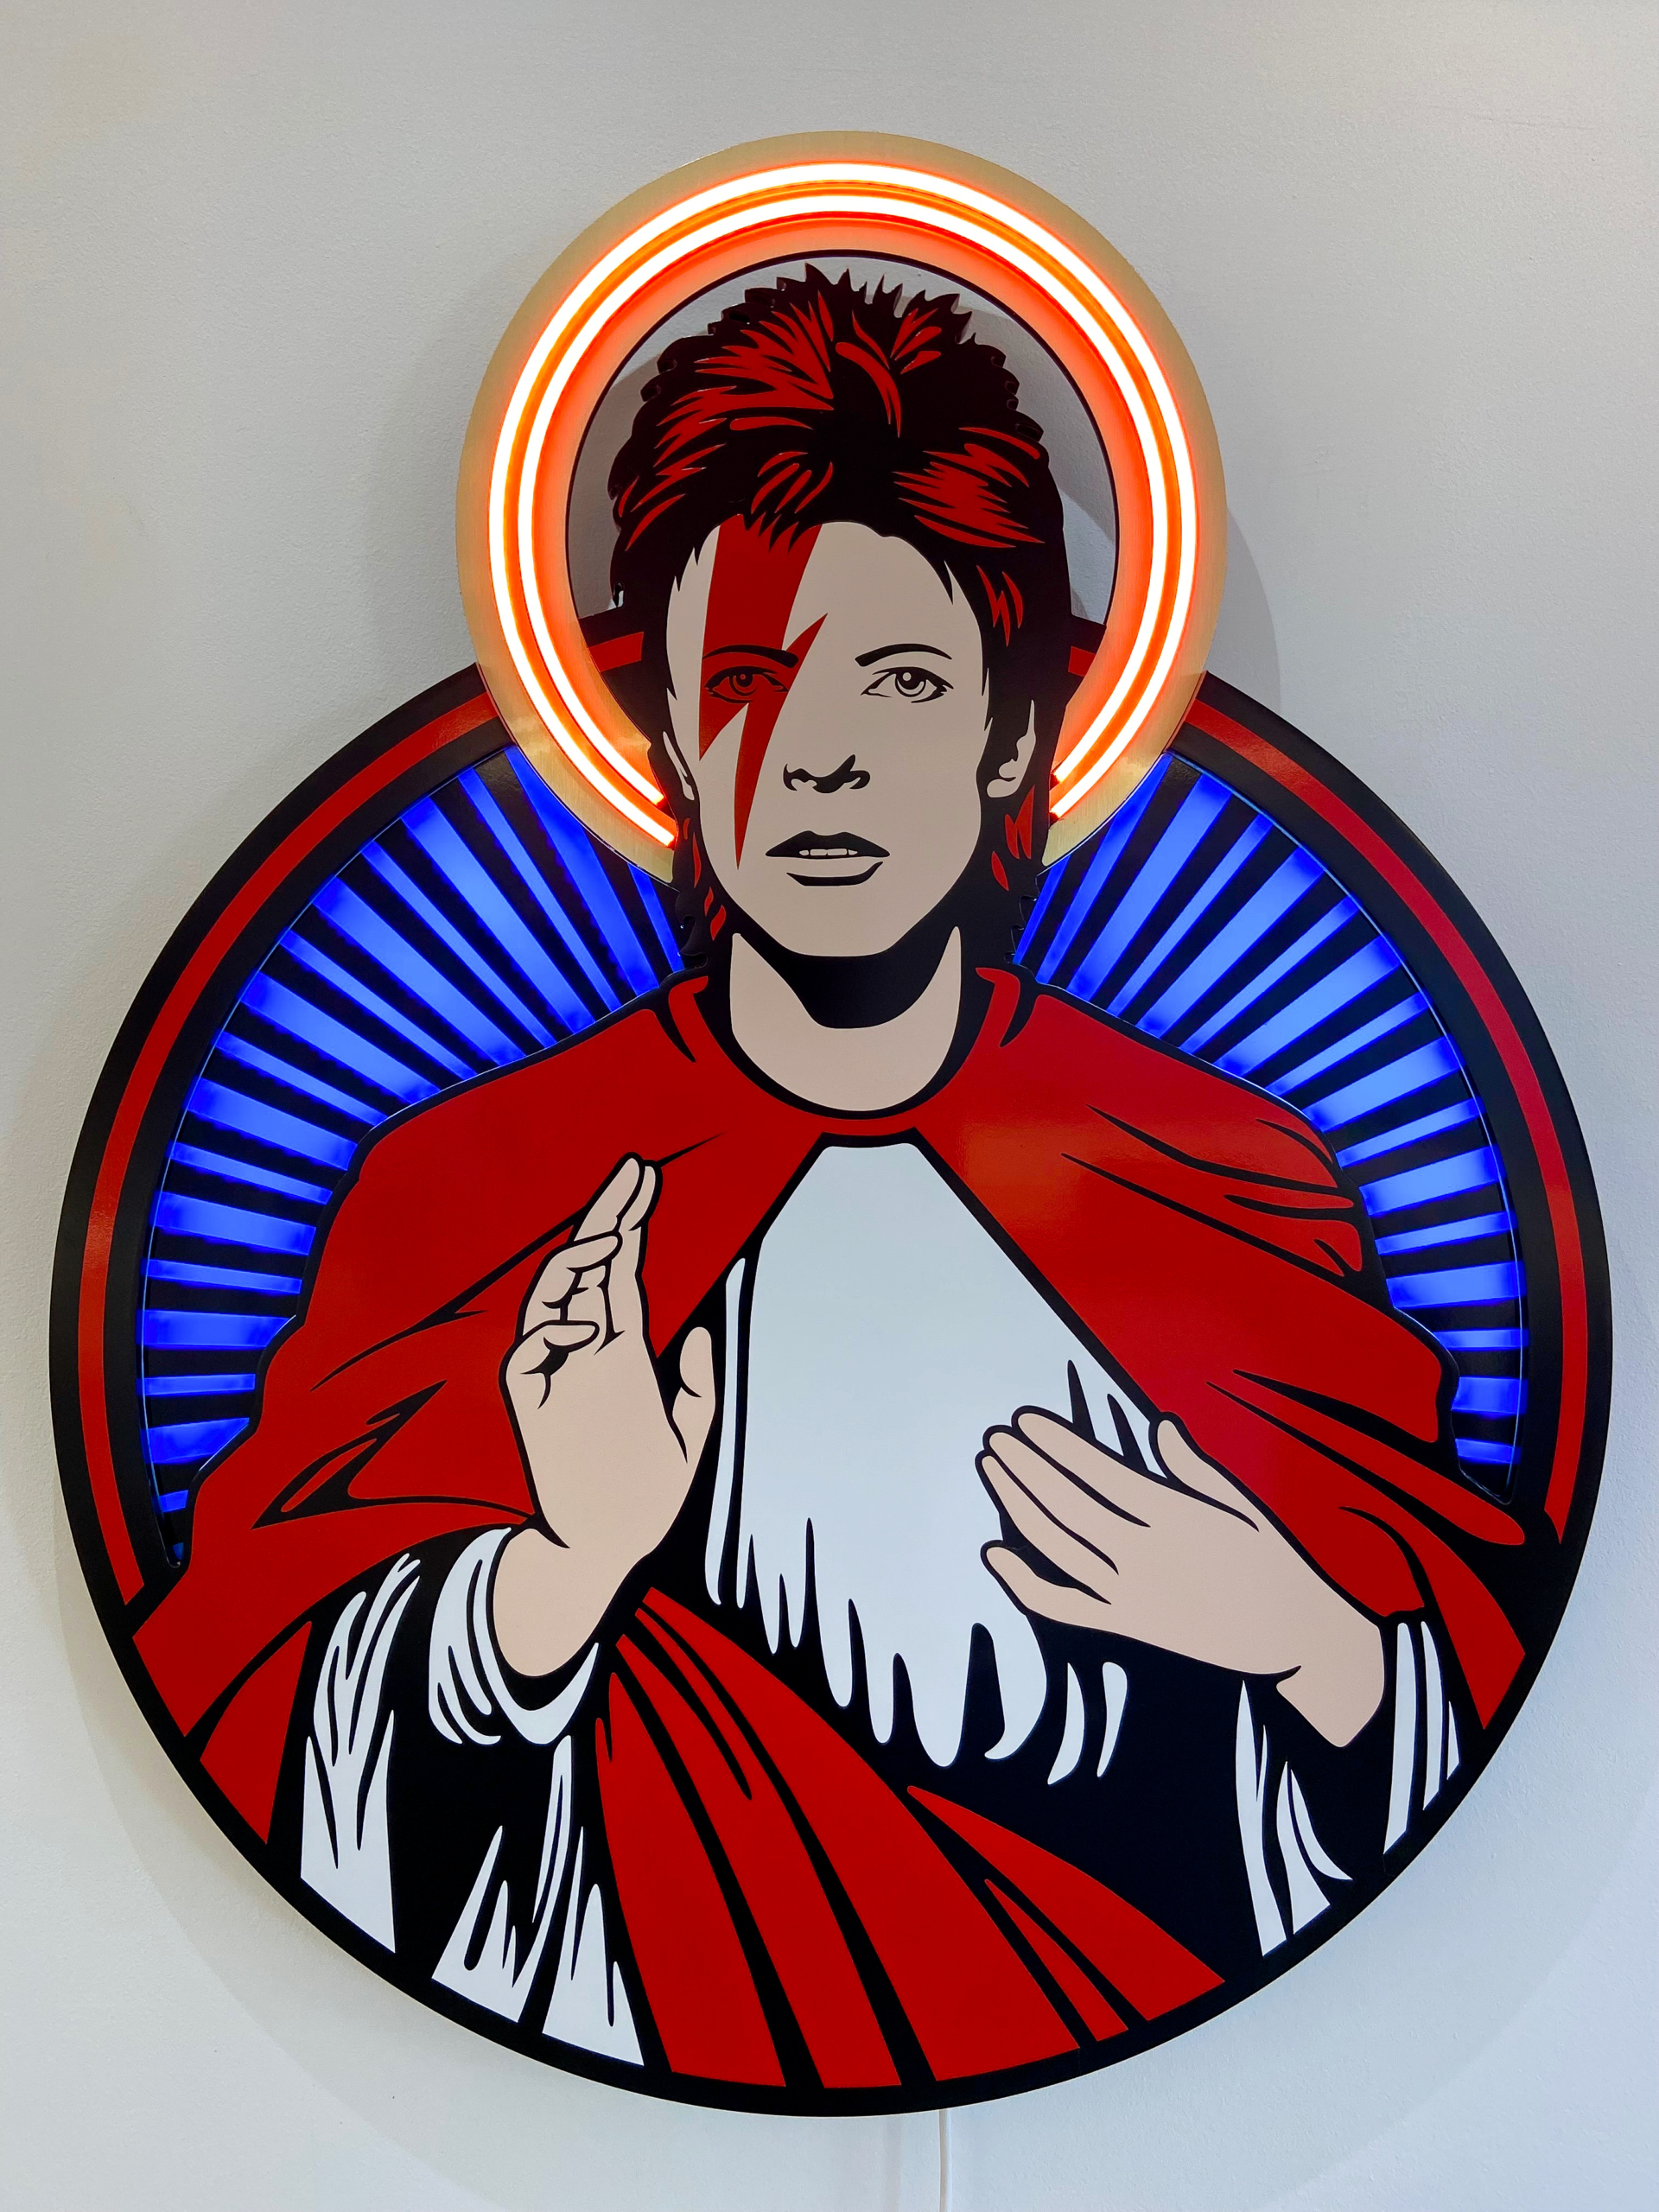 Bowie image